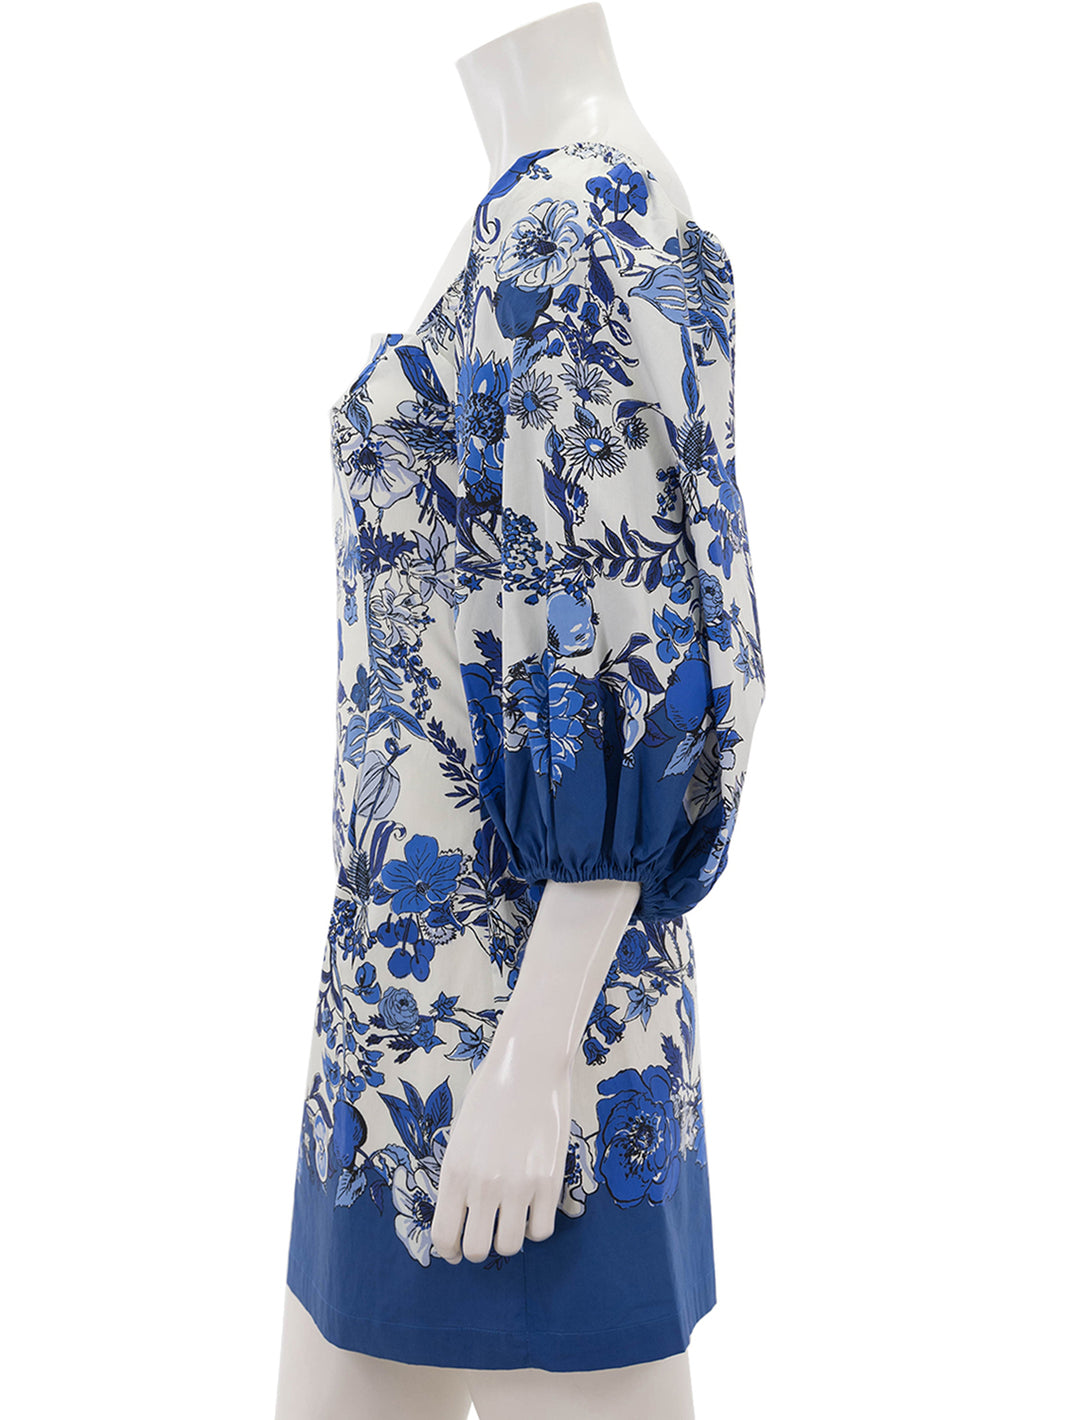 Side view of Cara Cara's montauk dress in flower grid blue.